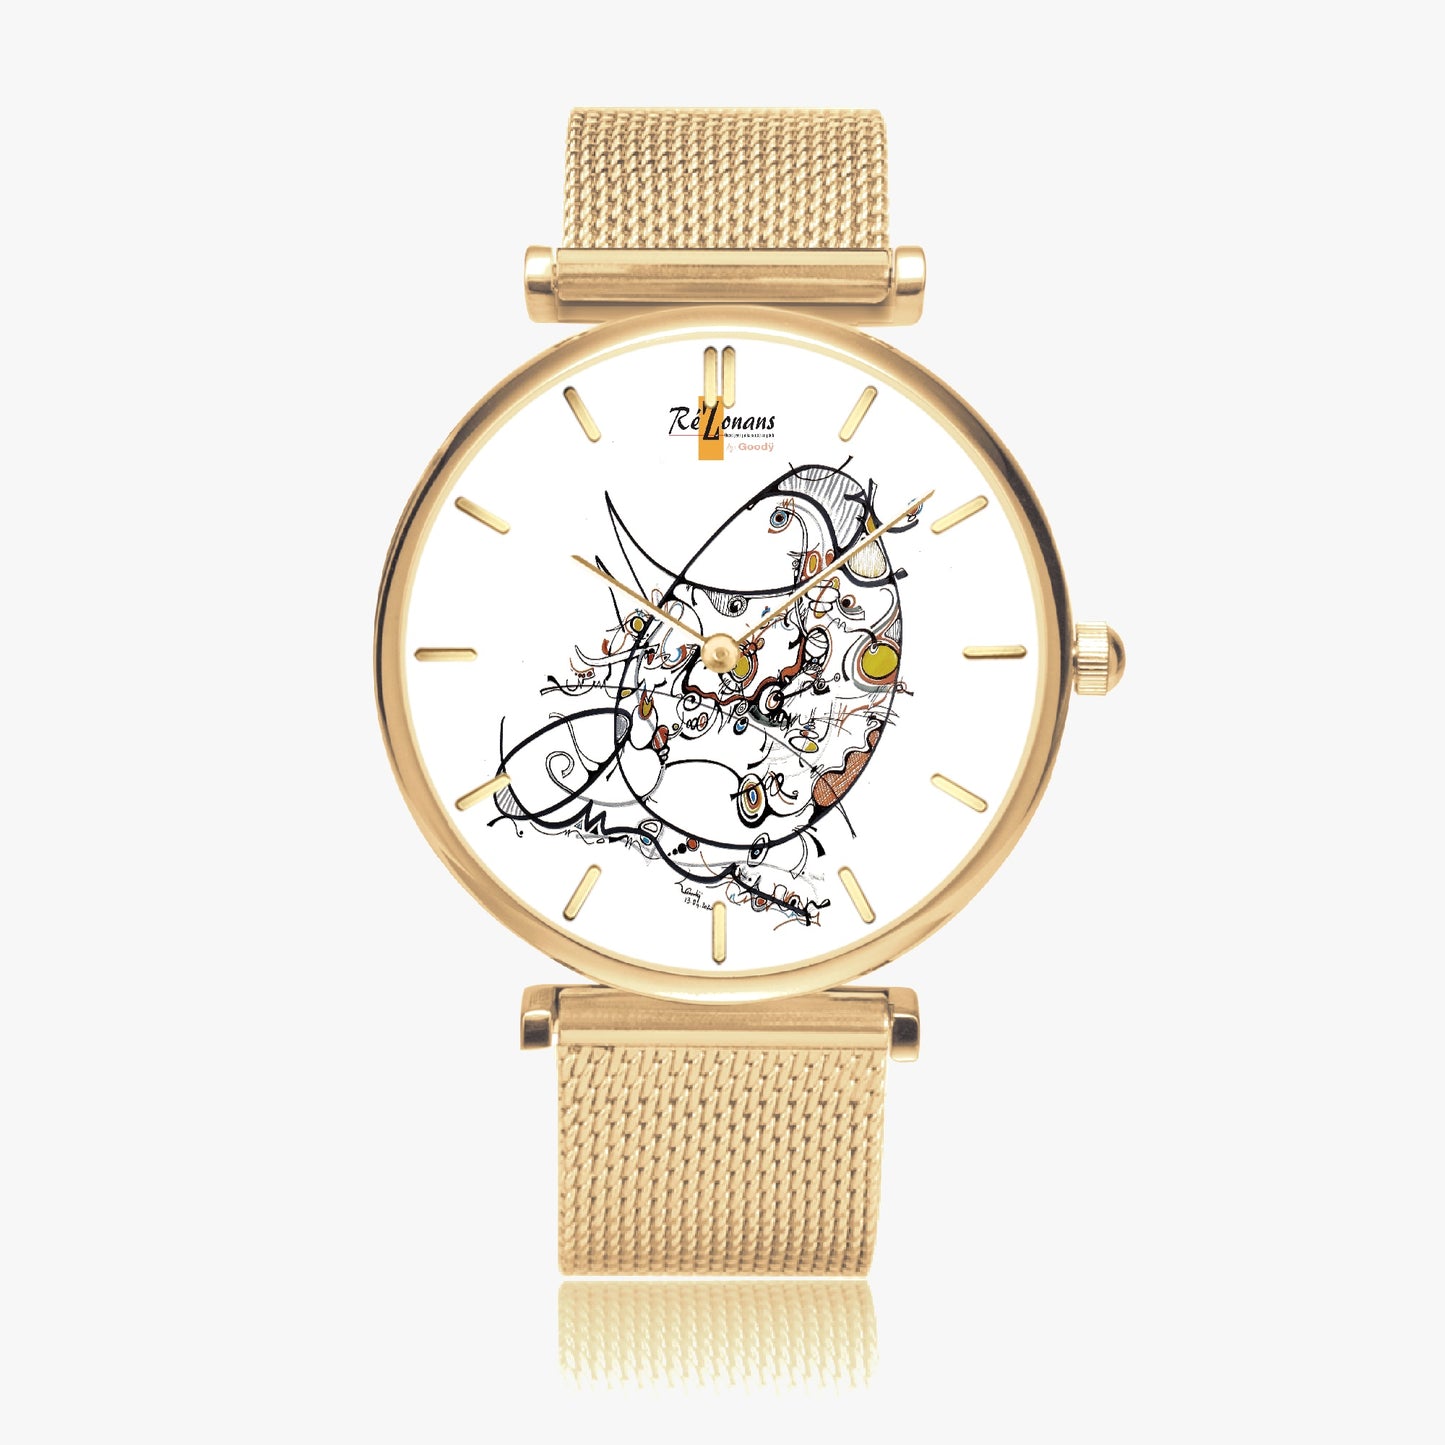 Ultra thin fashion quartz watch "Kaomonde" (with indicators)